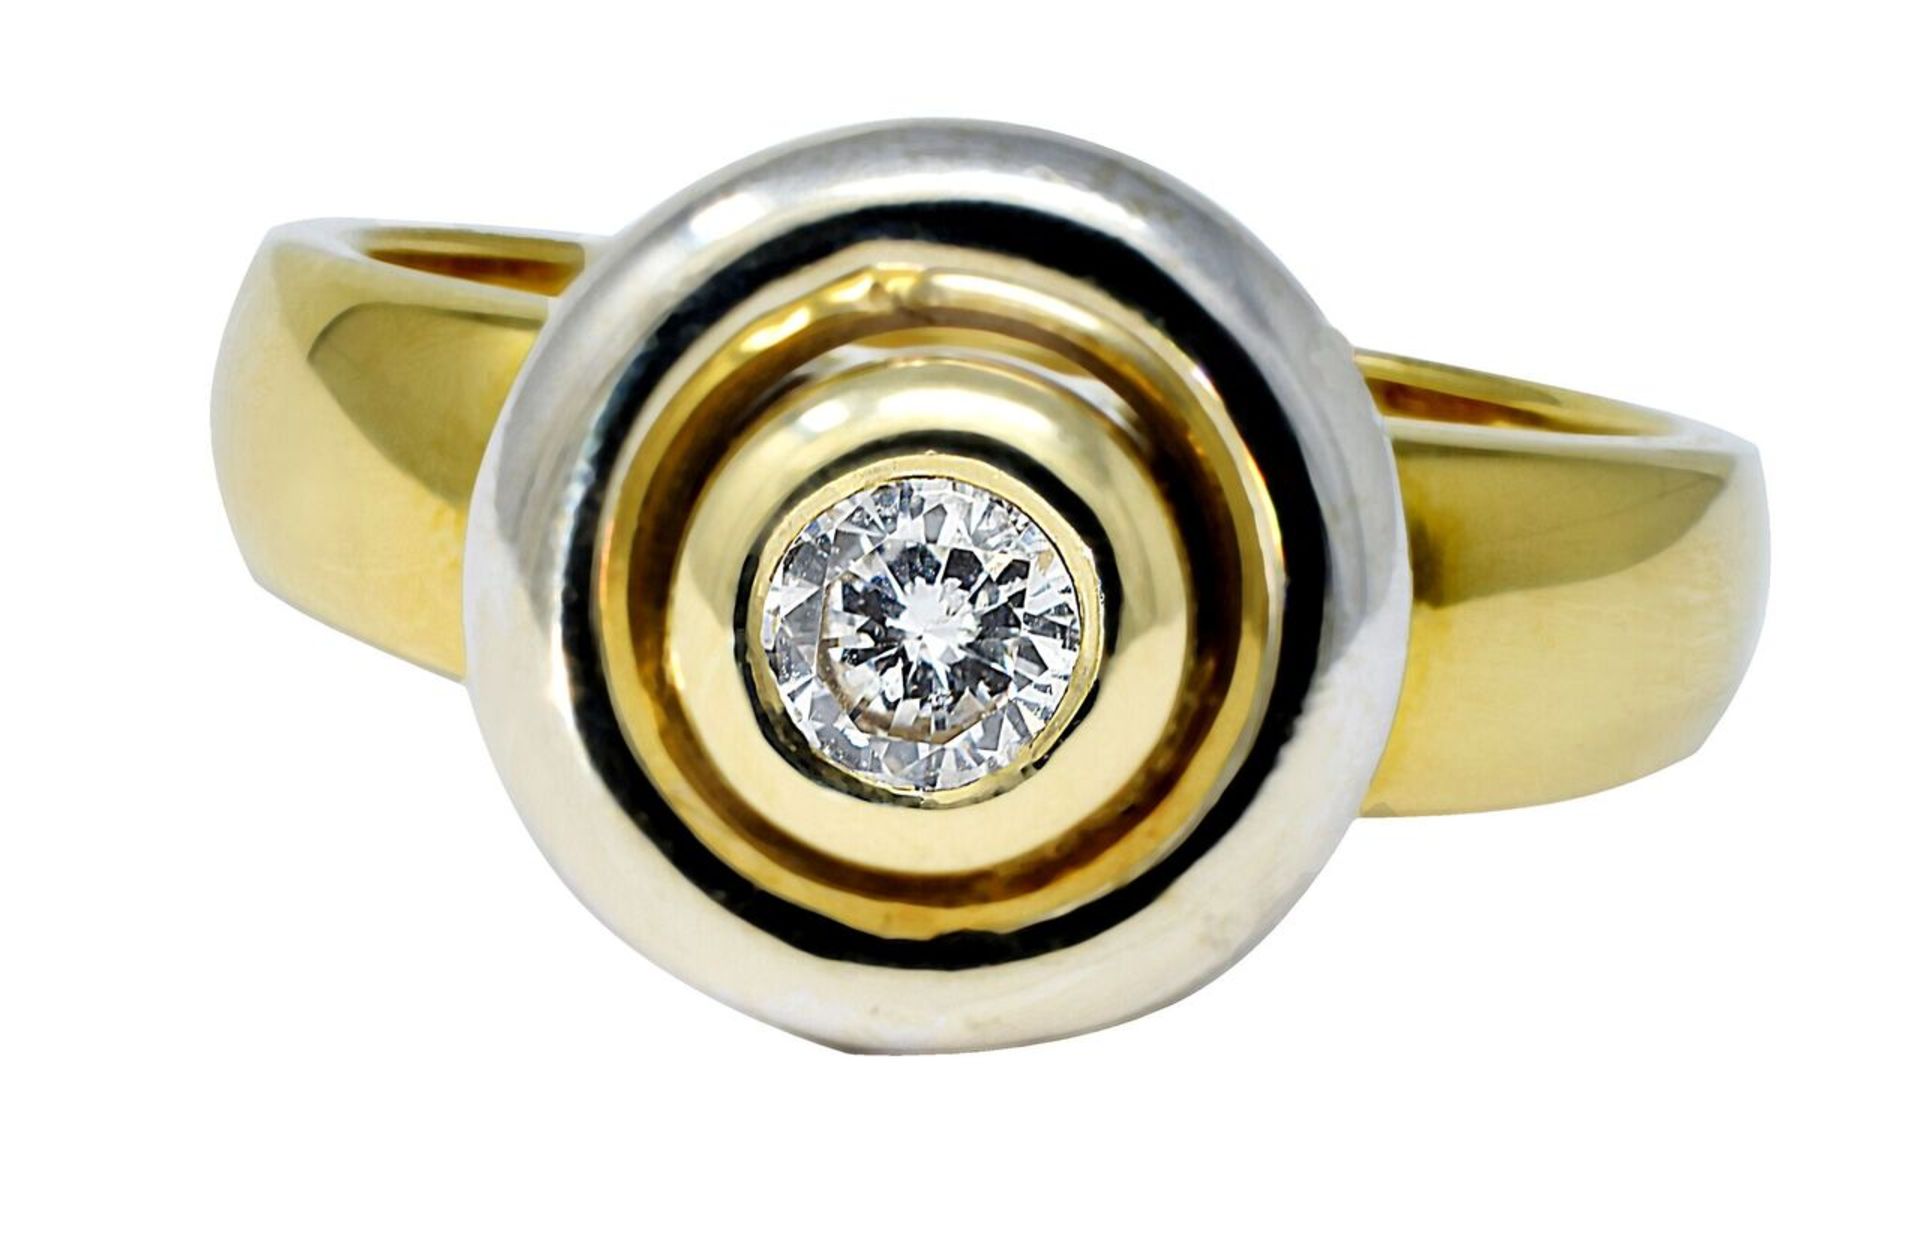 Two Tone Diamond Ring, Metal 9ct Yellow/White Gold, Weight (g) 5.21, Diamond Weight (ct) 0.25,